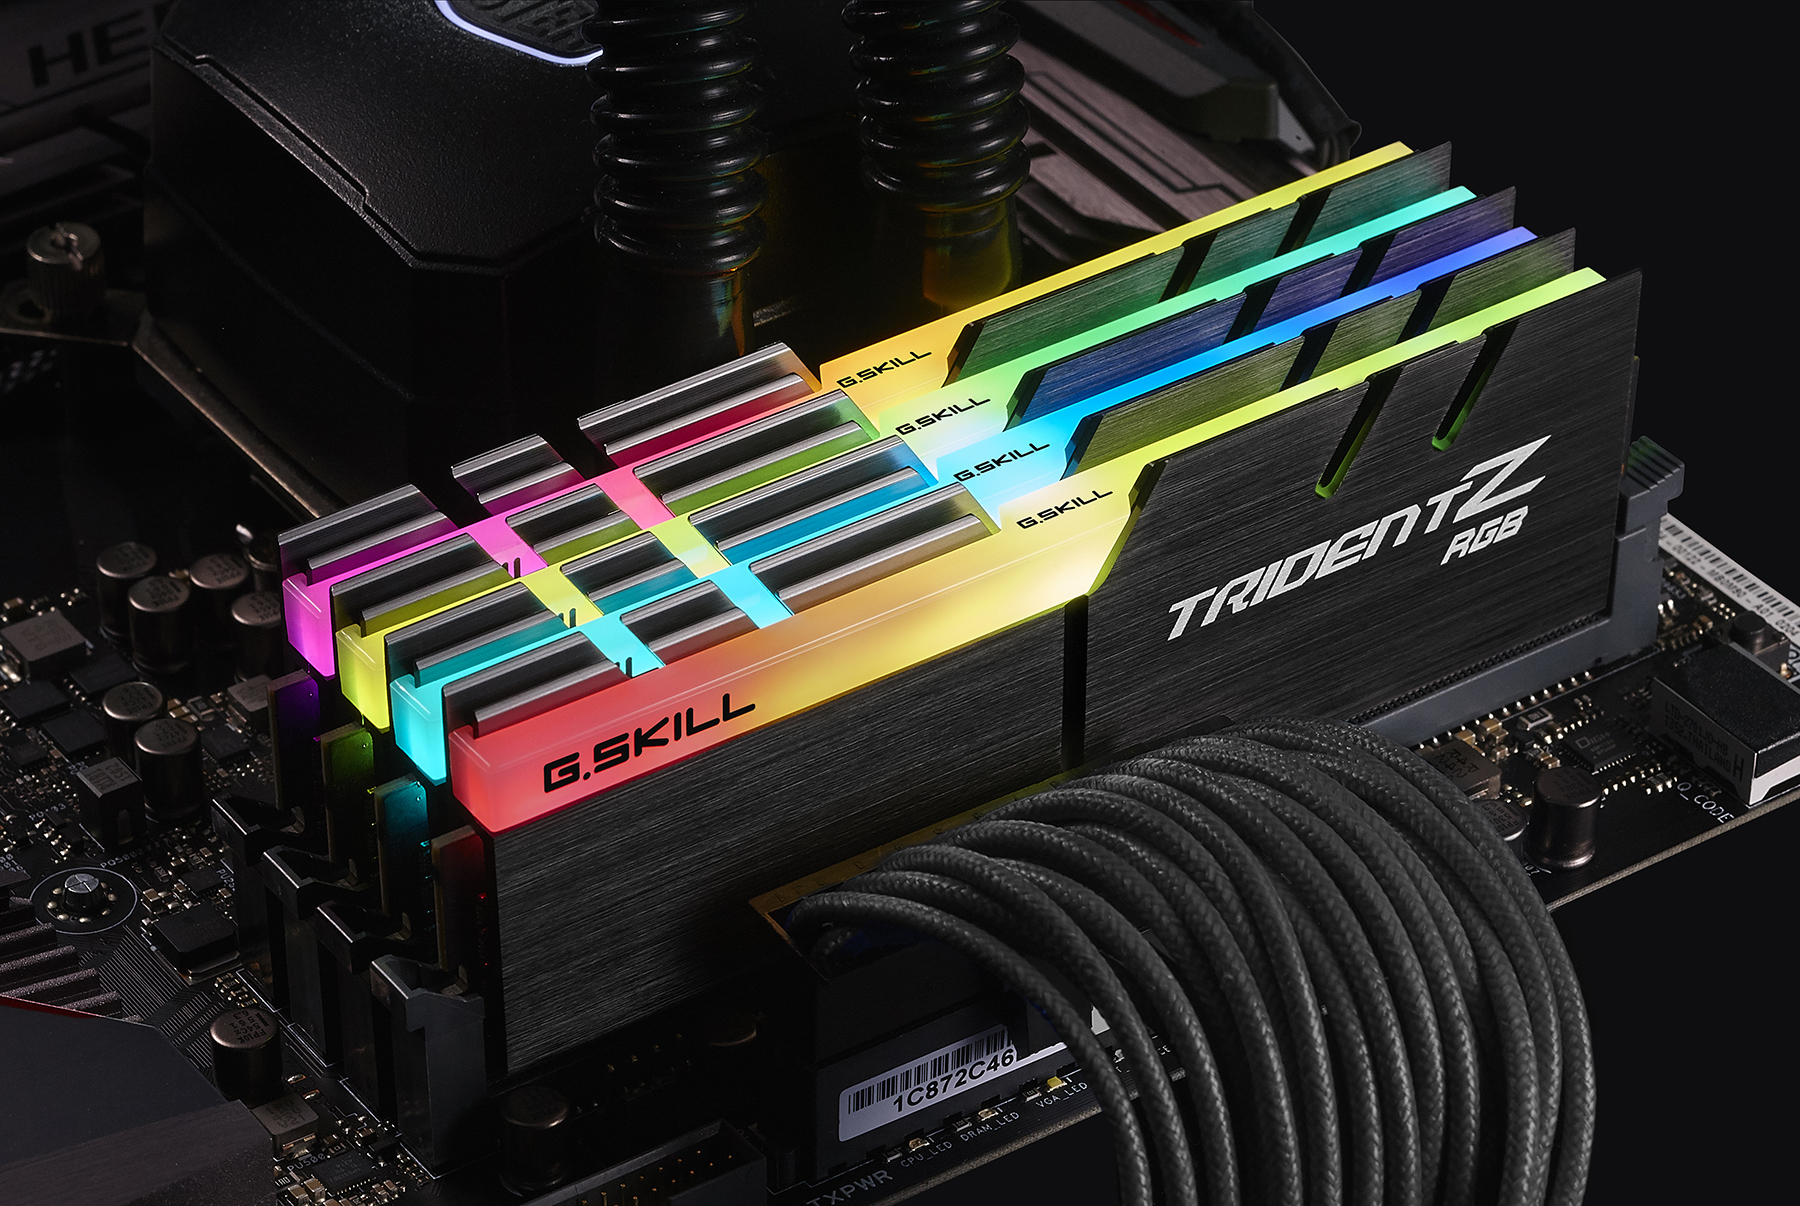 G.SKILL เปิดตัวแรม Trident Z RGB lighting DDR4 พร้อมมาพร้อมความแรงและสีสรรสุดอลังการ